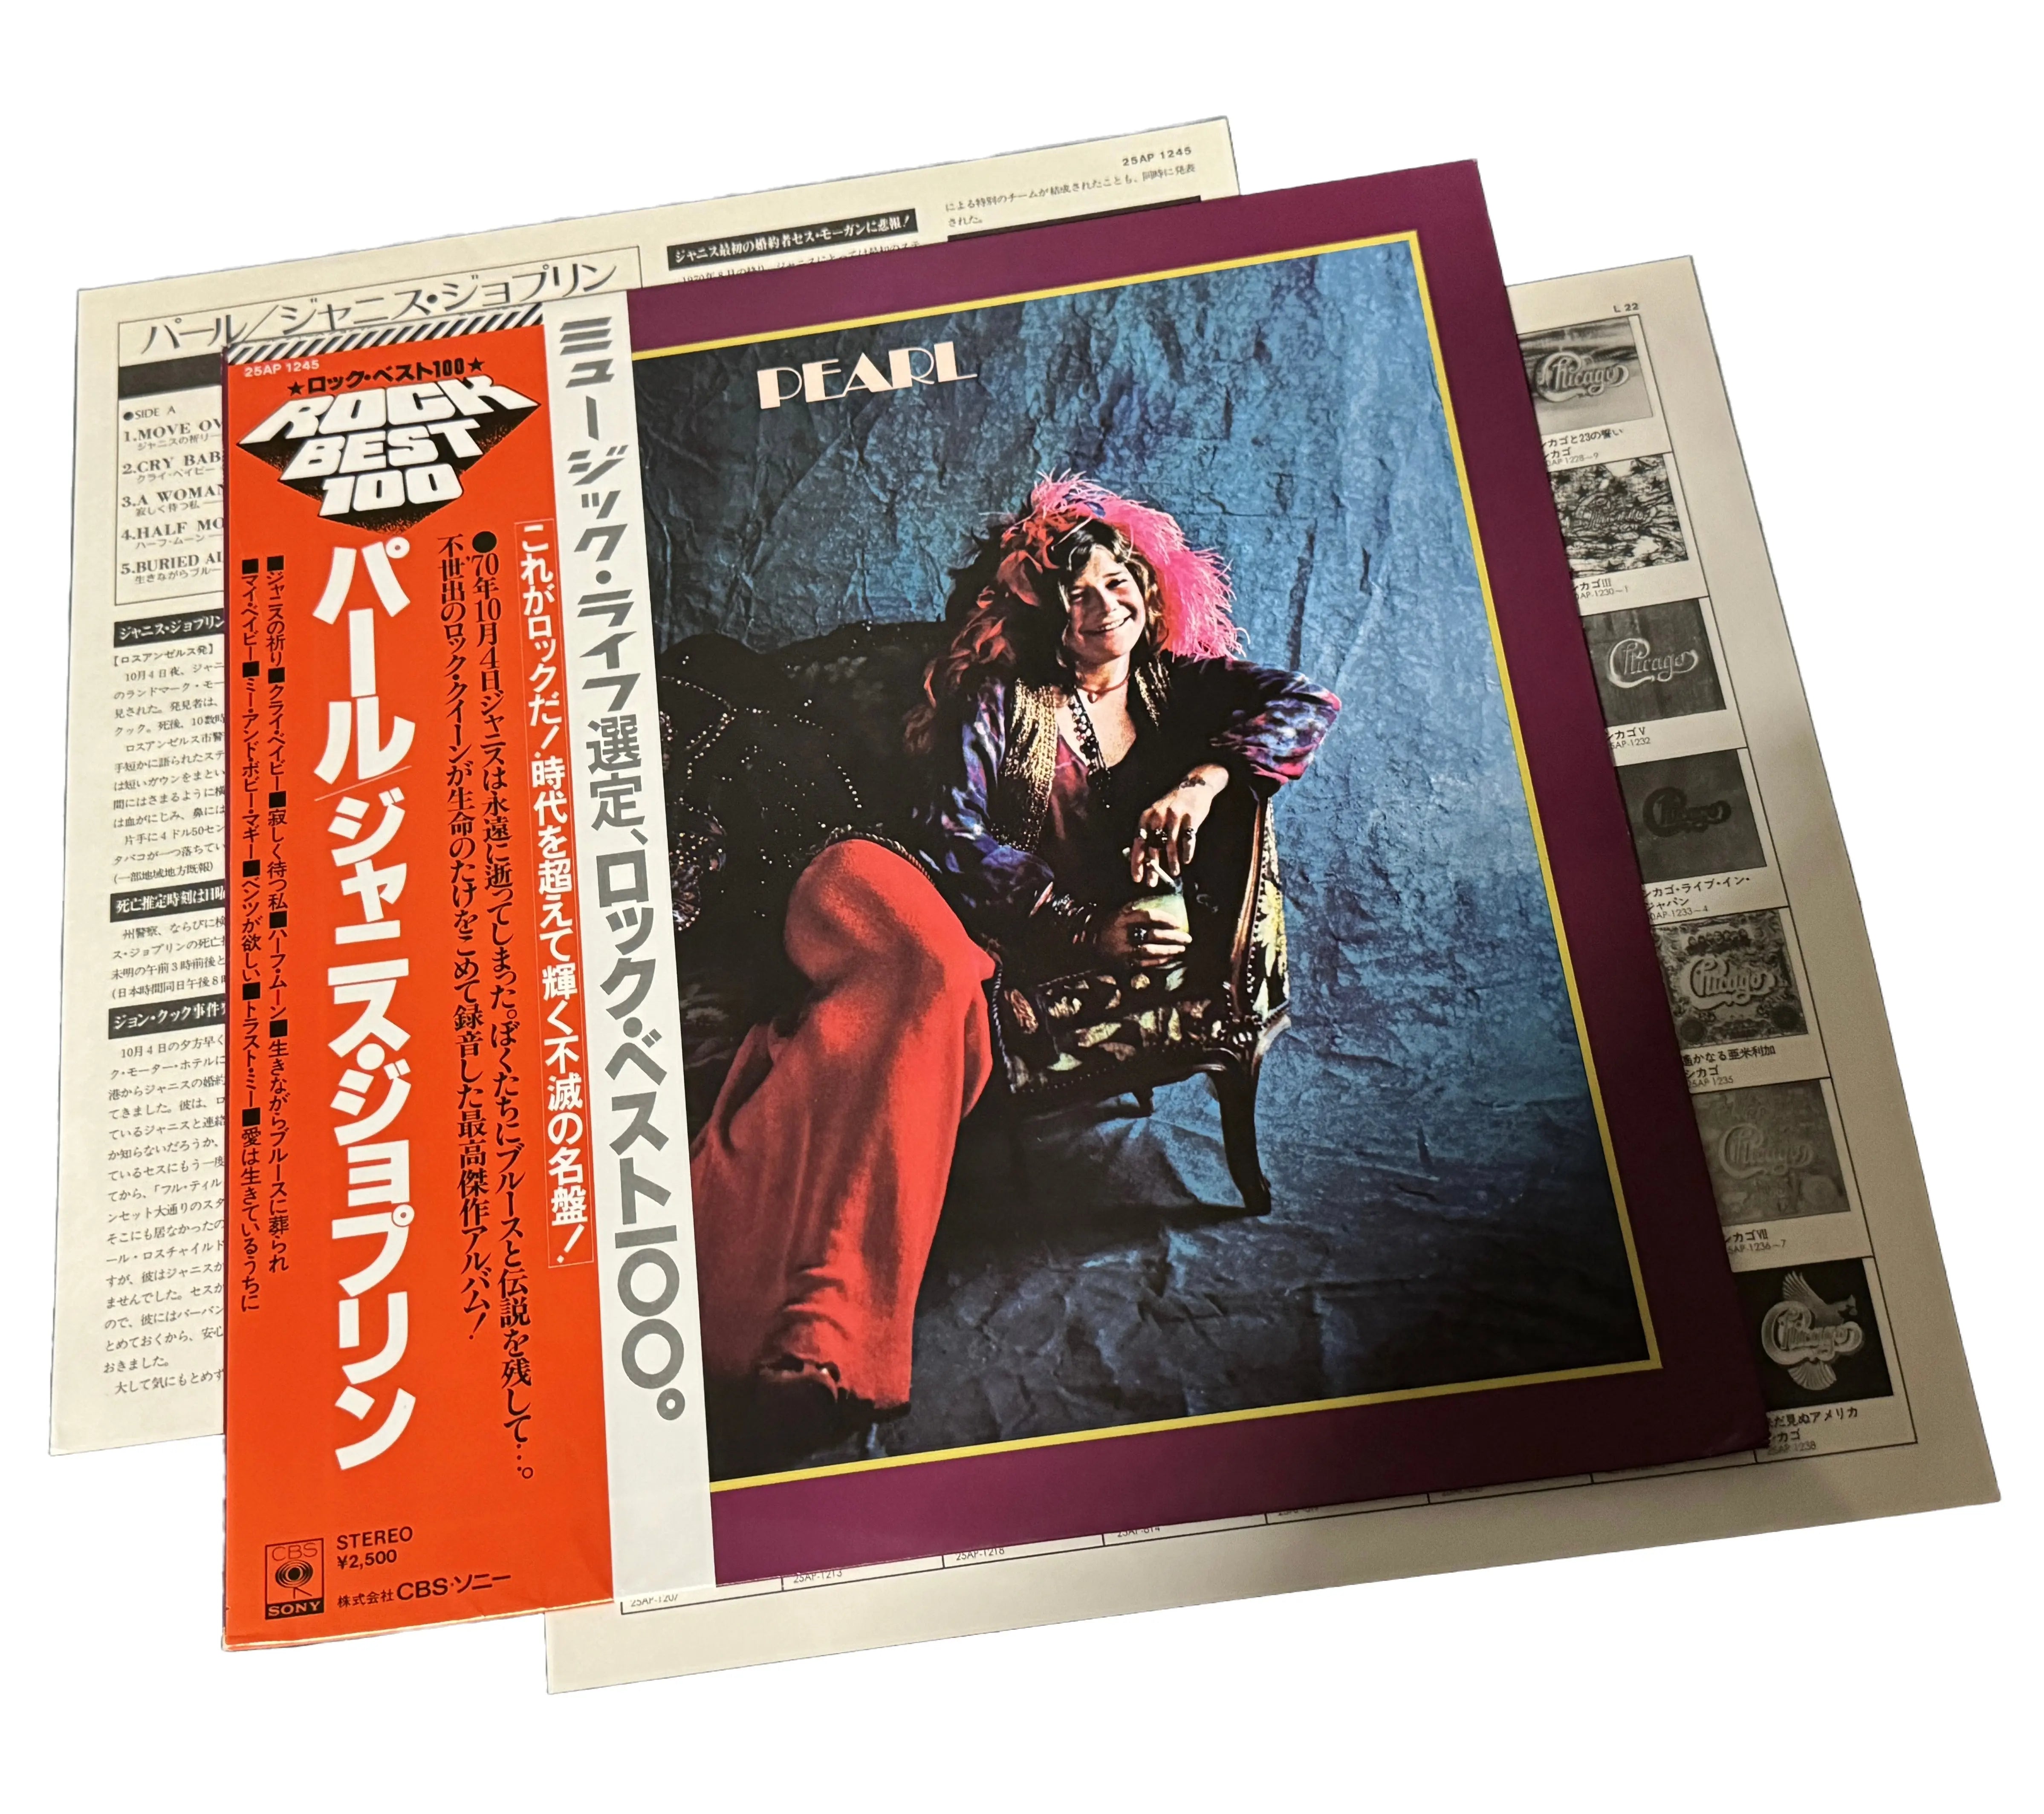 Pearl [Japanese Vinyl]